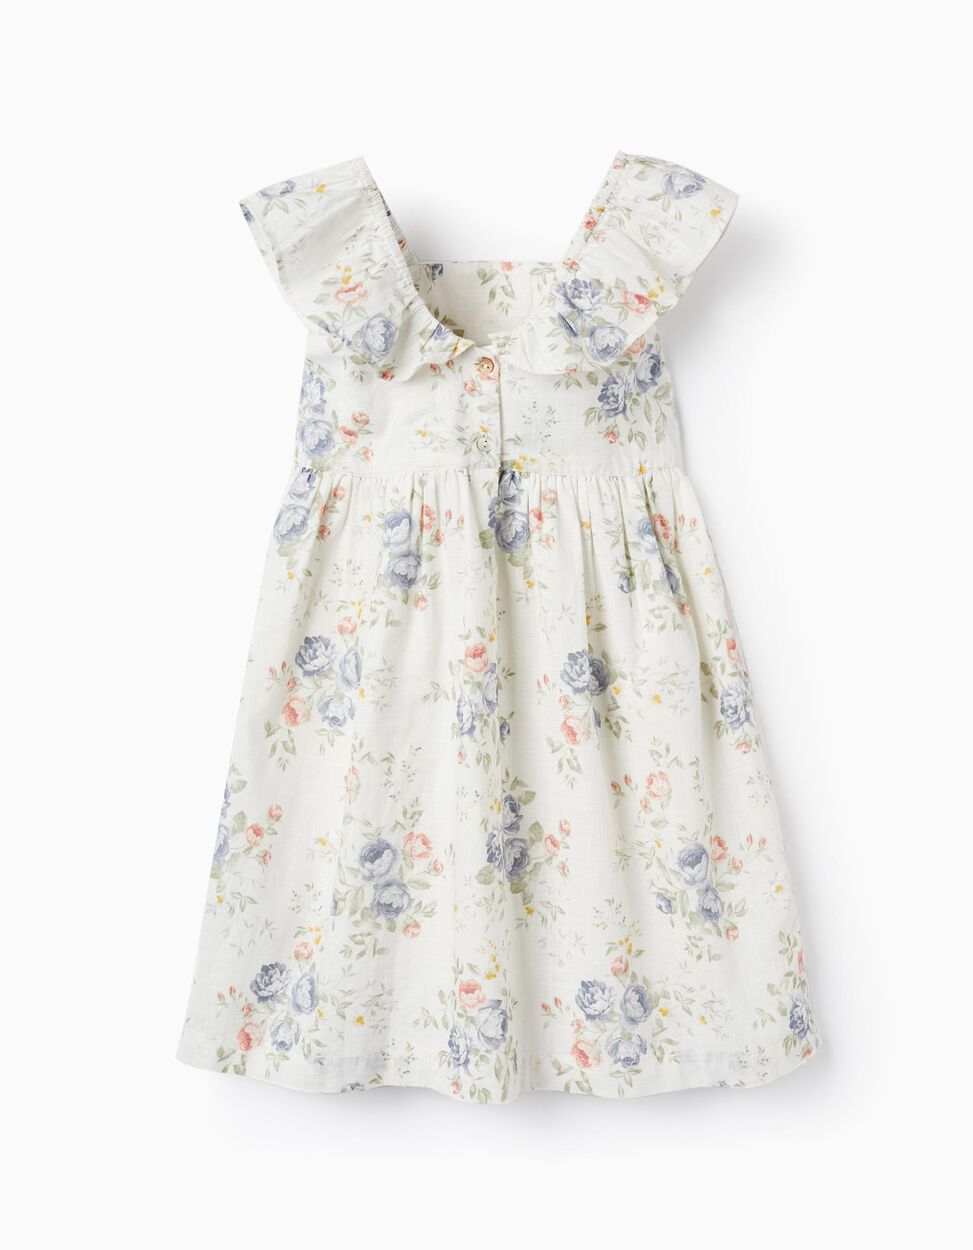 Buy Online Cotton Flower Dress for Girls 'You&Me', White